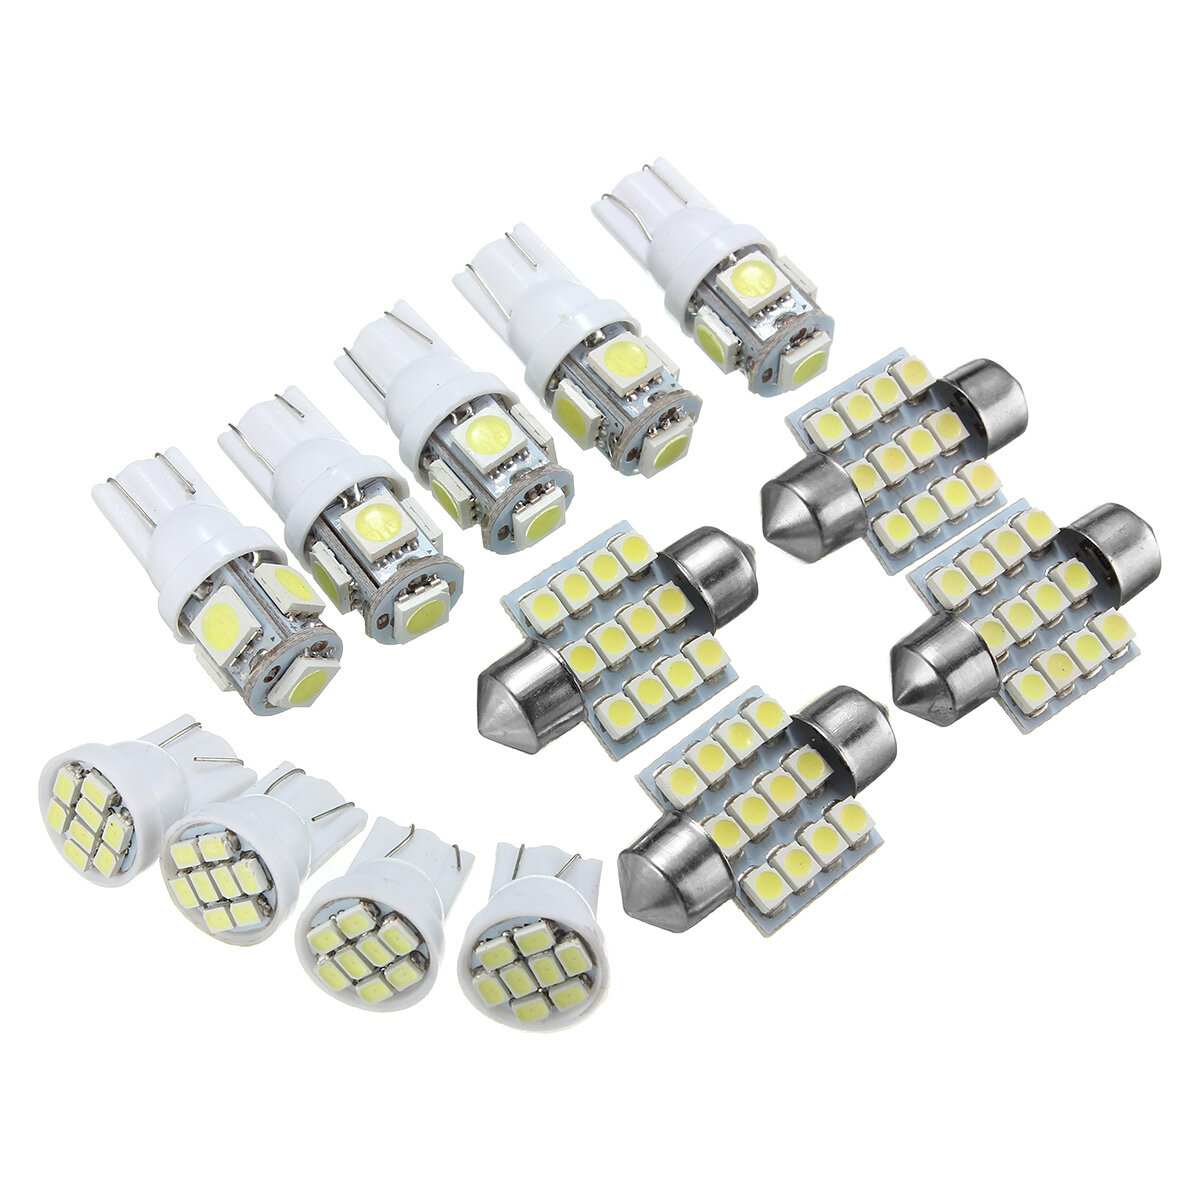 13 stks T10 SMD LED auto-interieur licht kit festoen kaart Dome lamp kentekenverlichting xenon wit